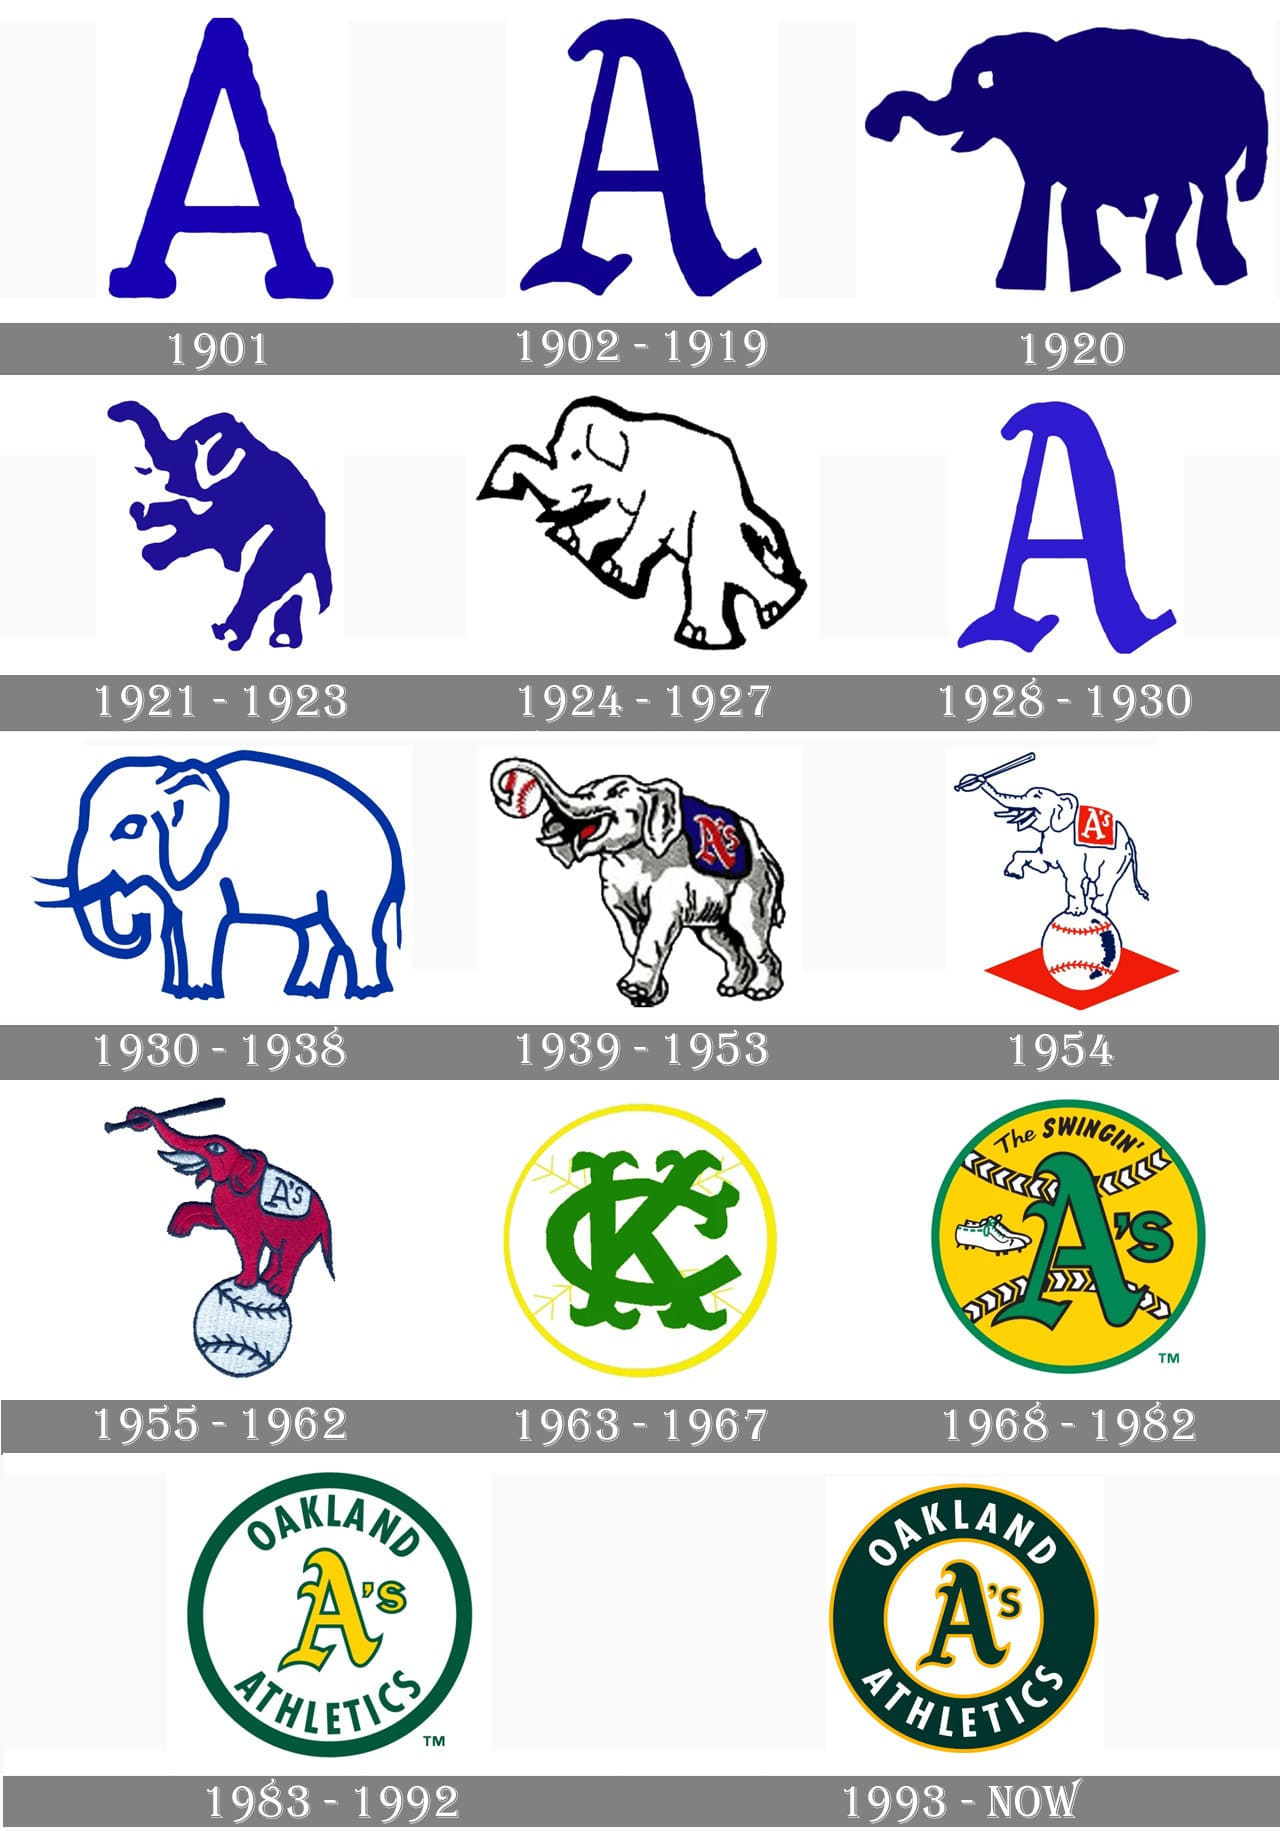 History of the Oakland Athletics - Wikipedia